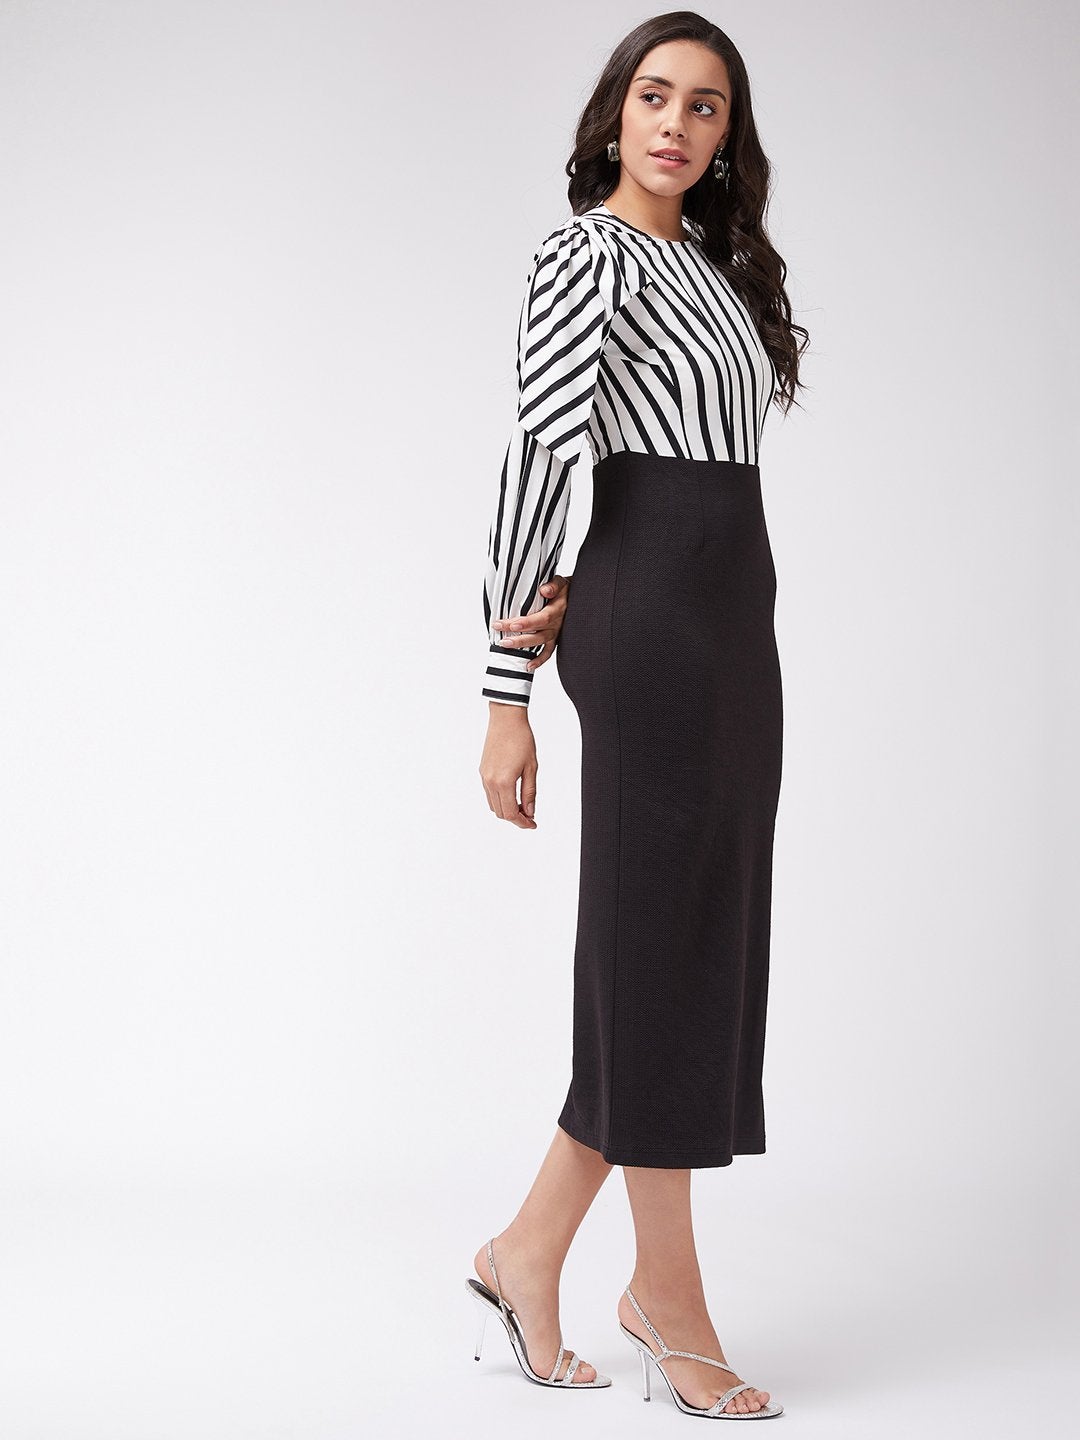 Women's Monocromaric Stripe Fitted Dress - Pannkh